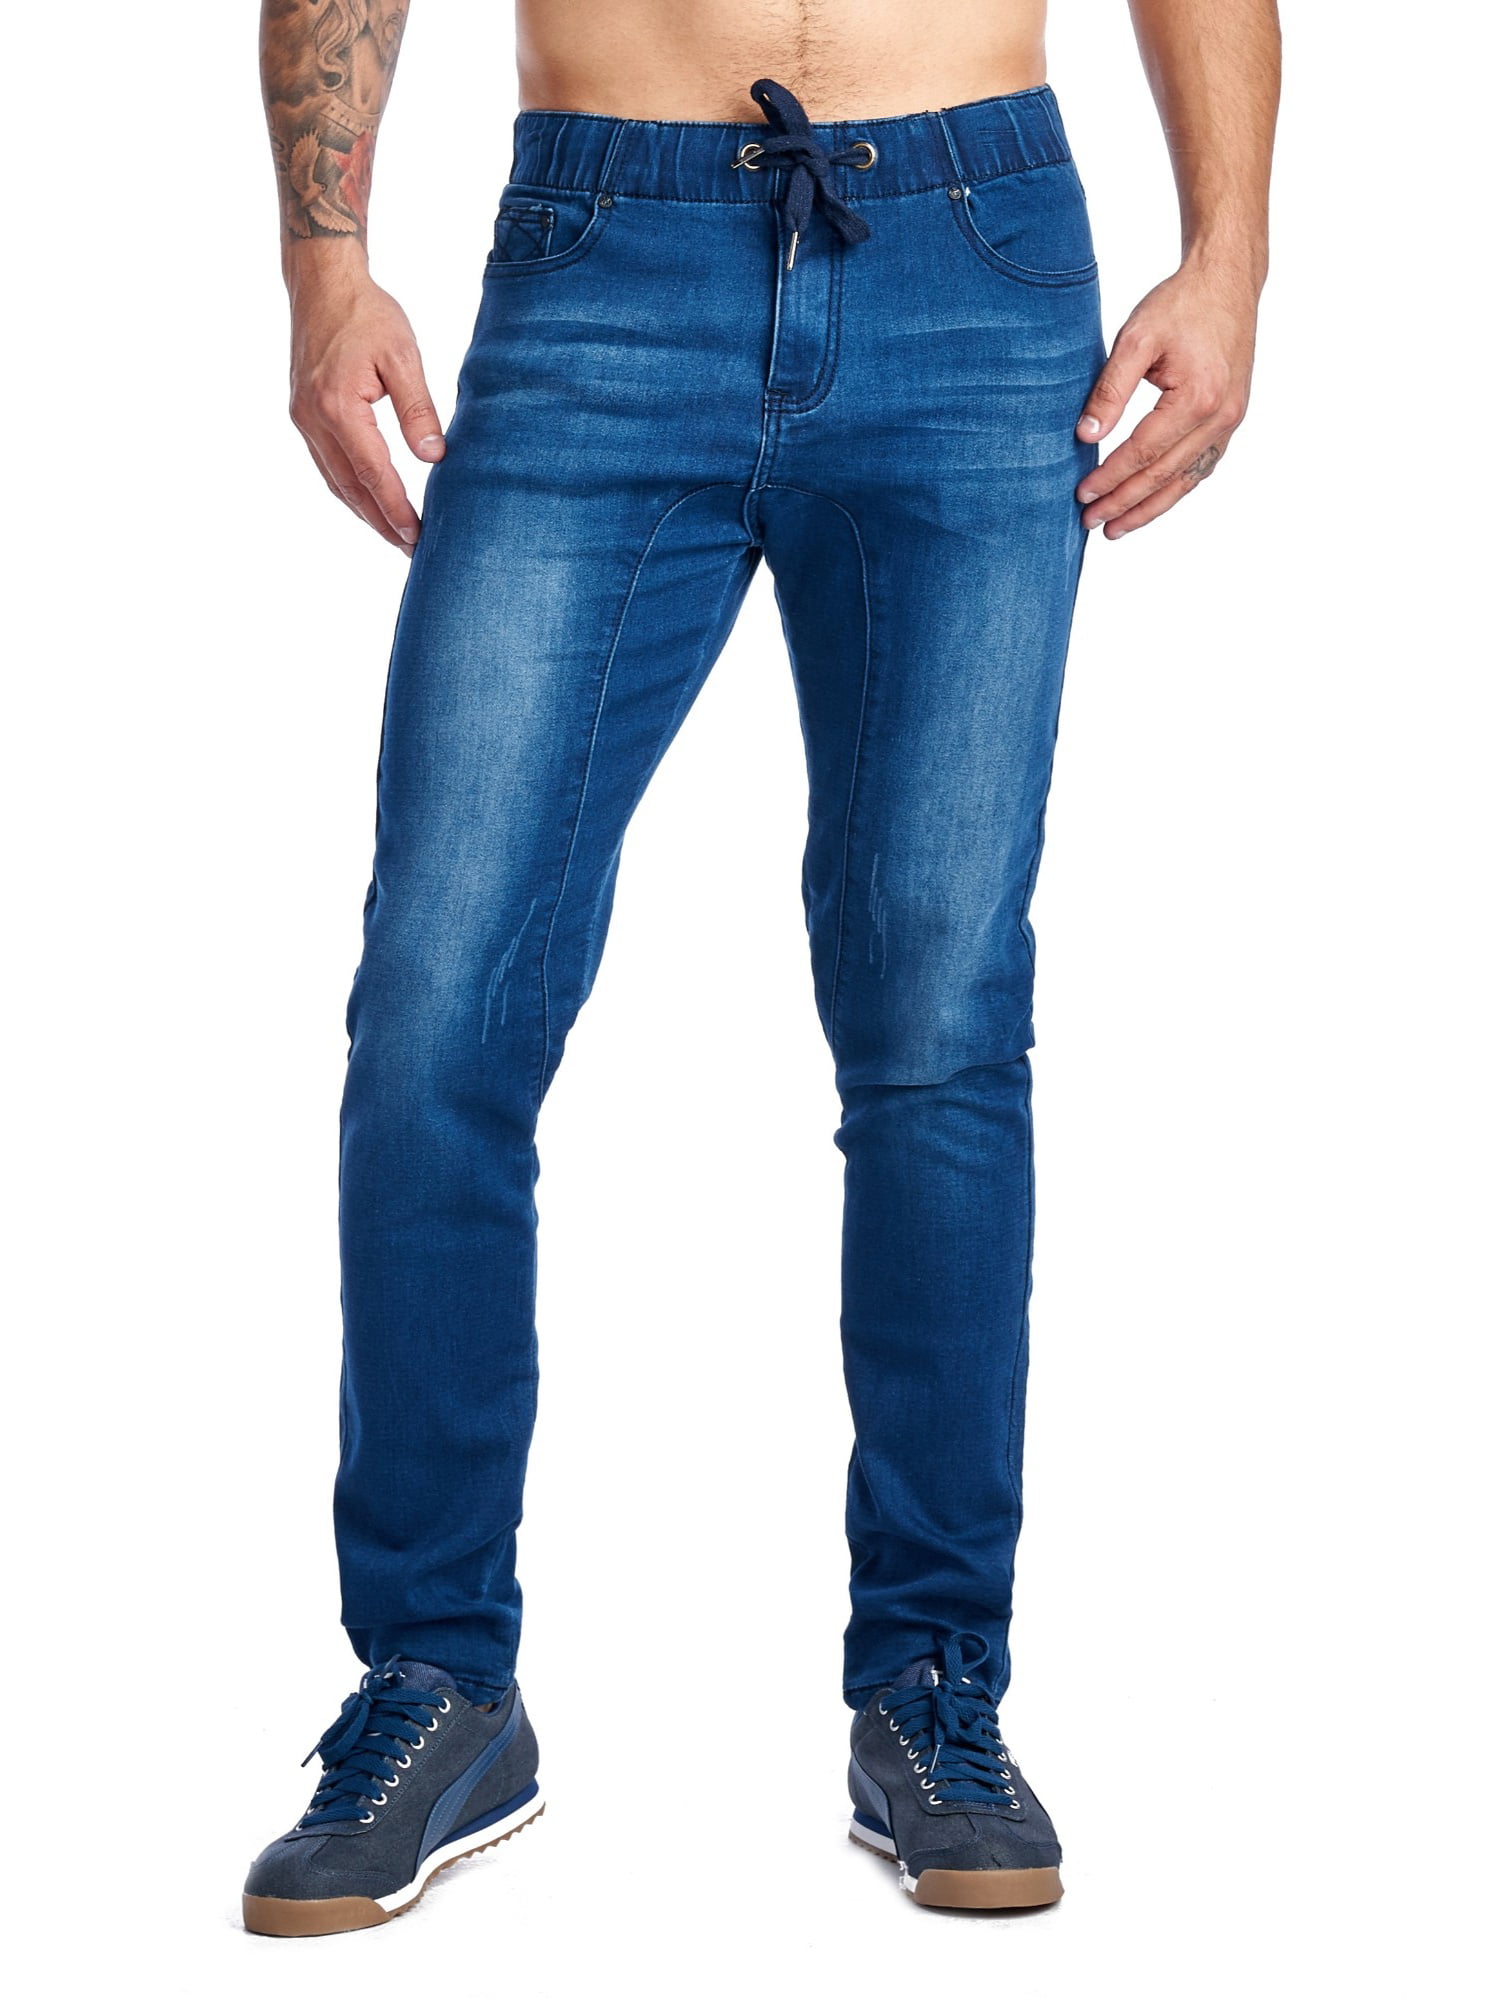 A Jeans Men's Denim Pant Jogger Styling Slim Fit 42124NC Medium Blue ...